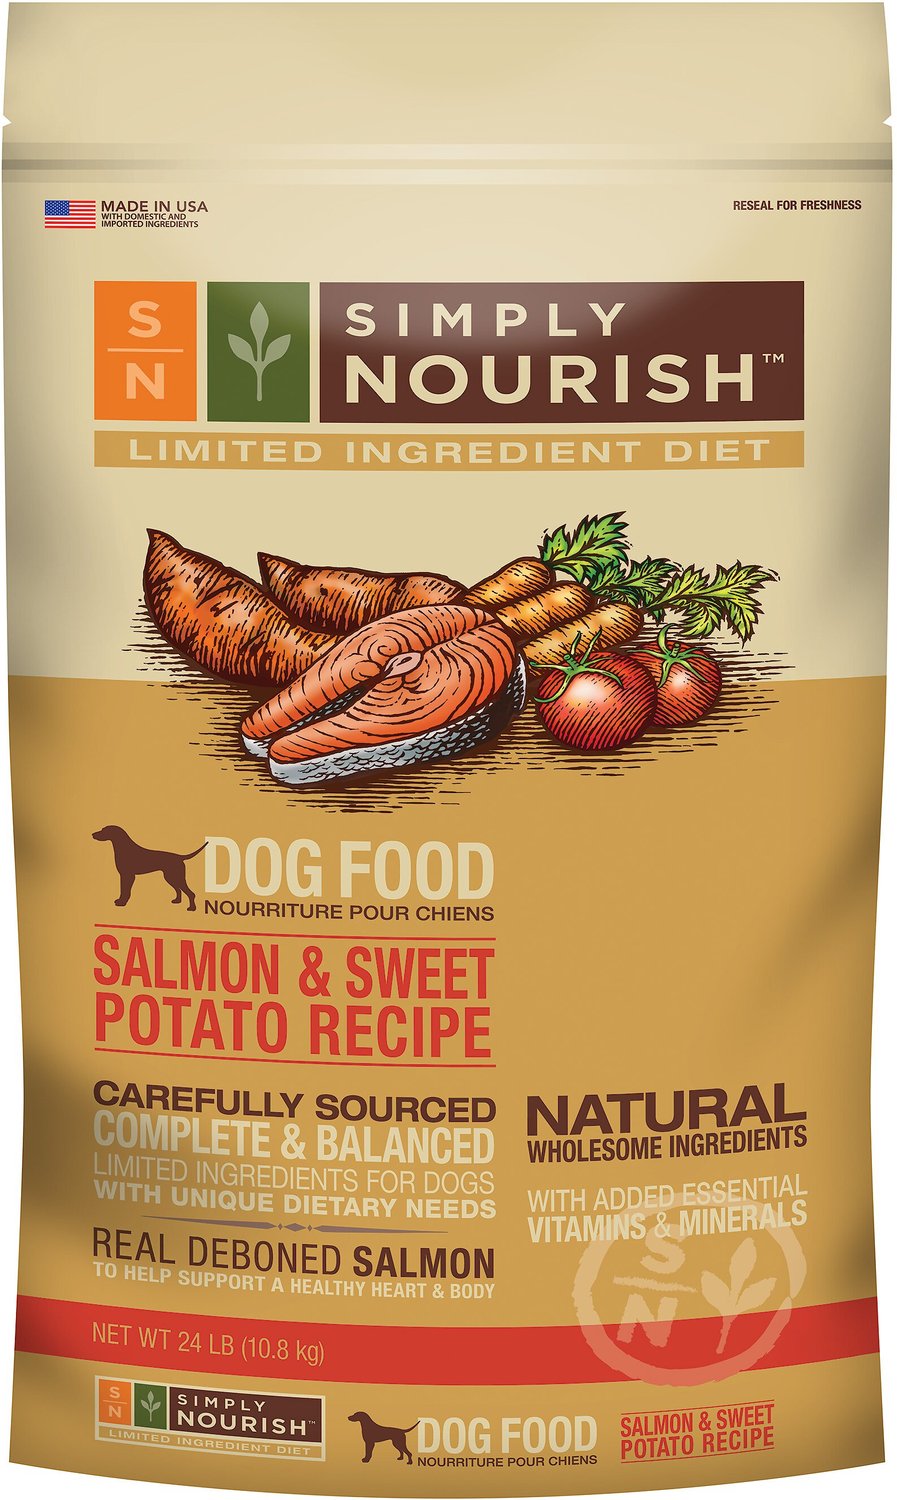 Simply Nourish Limited Ingredient Diet Salmon & Sweet Potato Recipe Dry